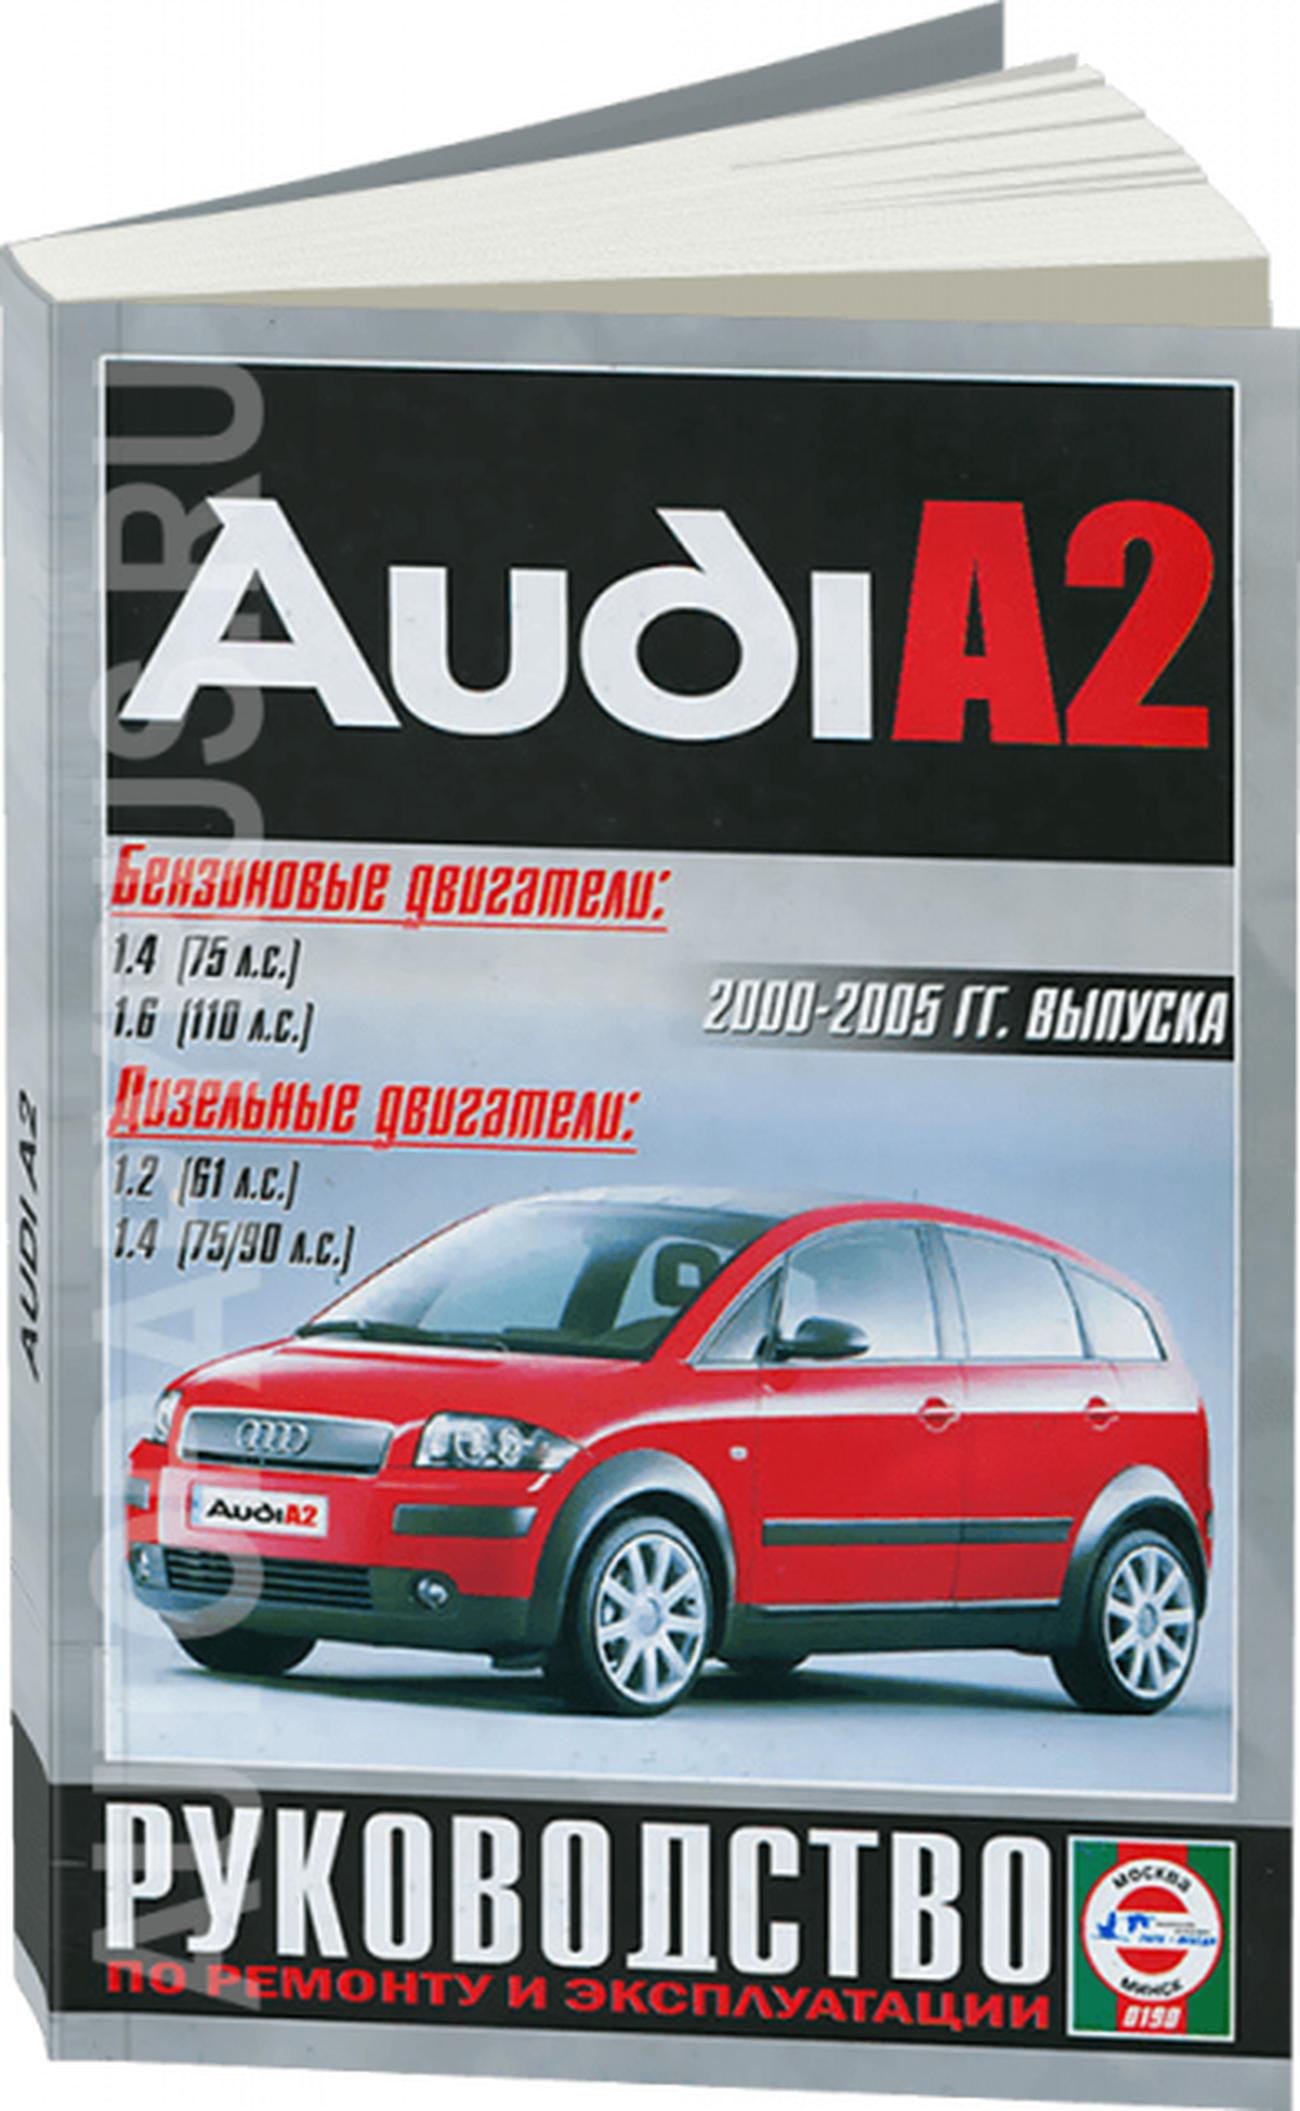 Книга: AUDI A2 (б , д) 2000-2005 г.в. рем., экспл., то | Чижовка